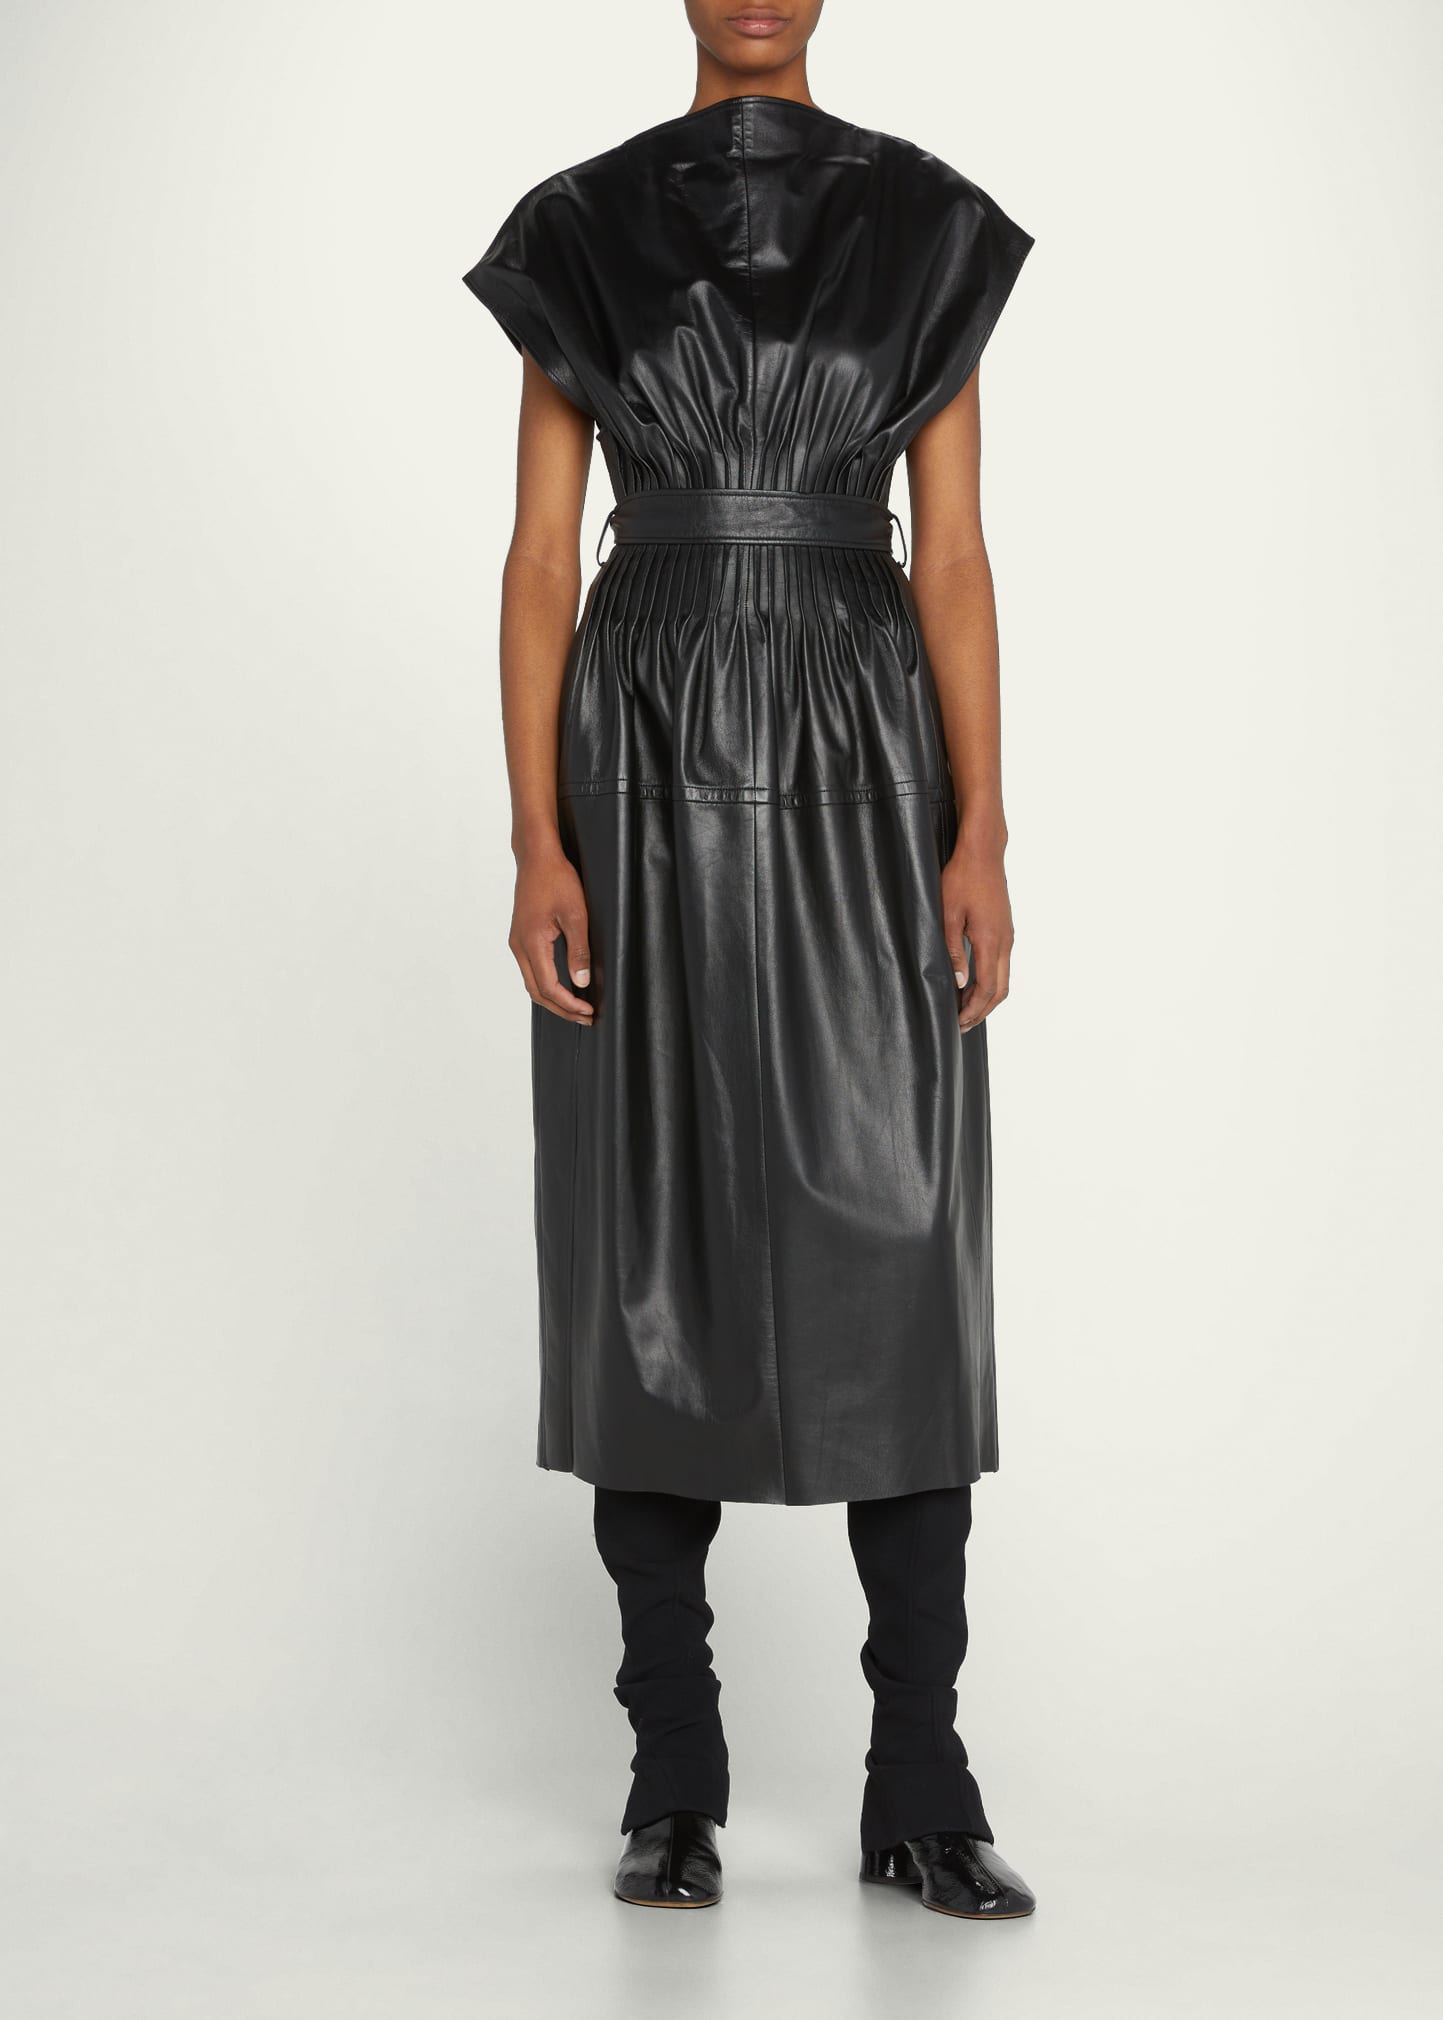 Cap Sleeve Fitted Dress | bergdorfgoodman.com